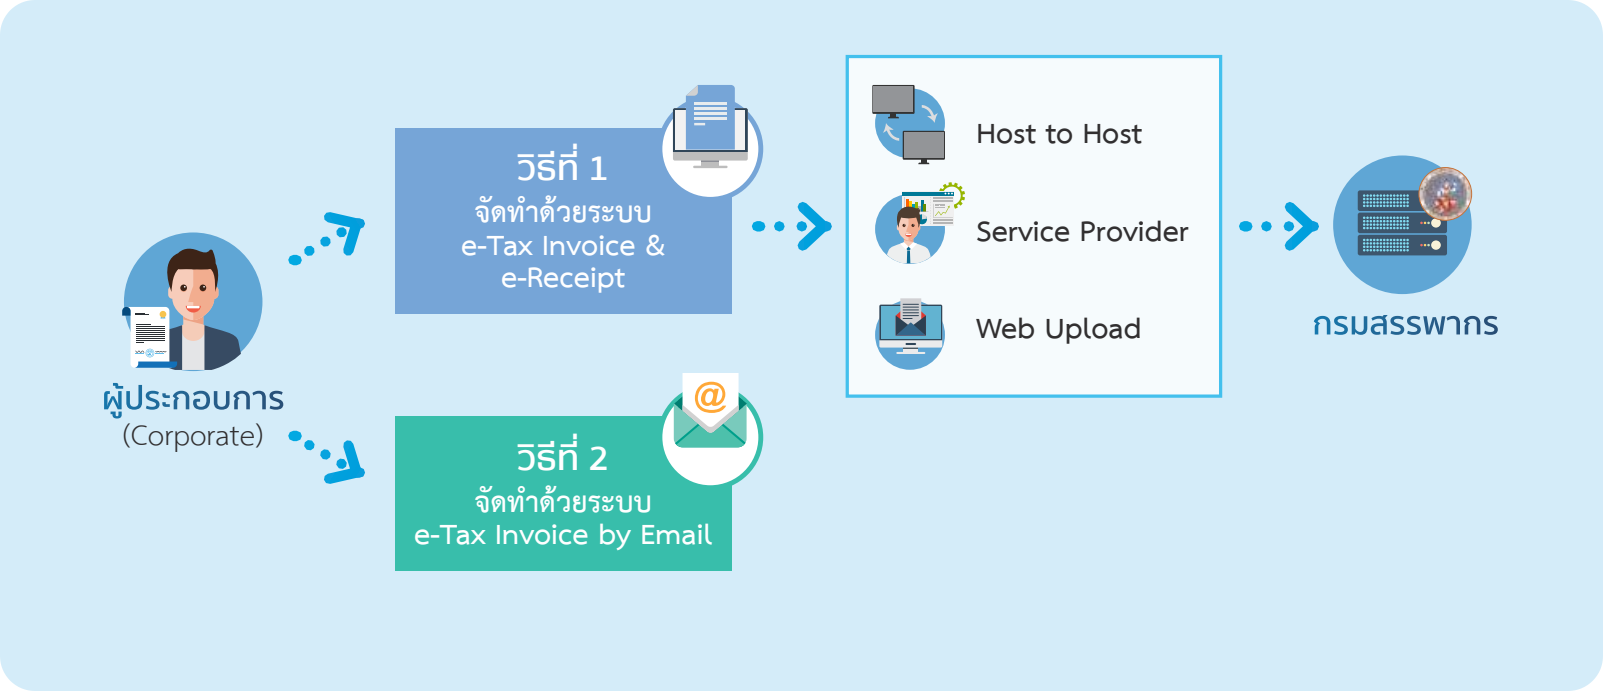 e-Tax invoice & e-Receipt flow